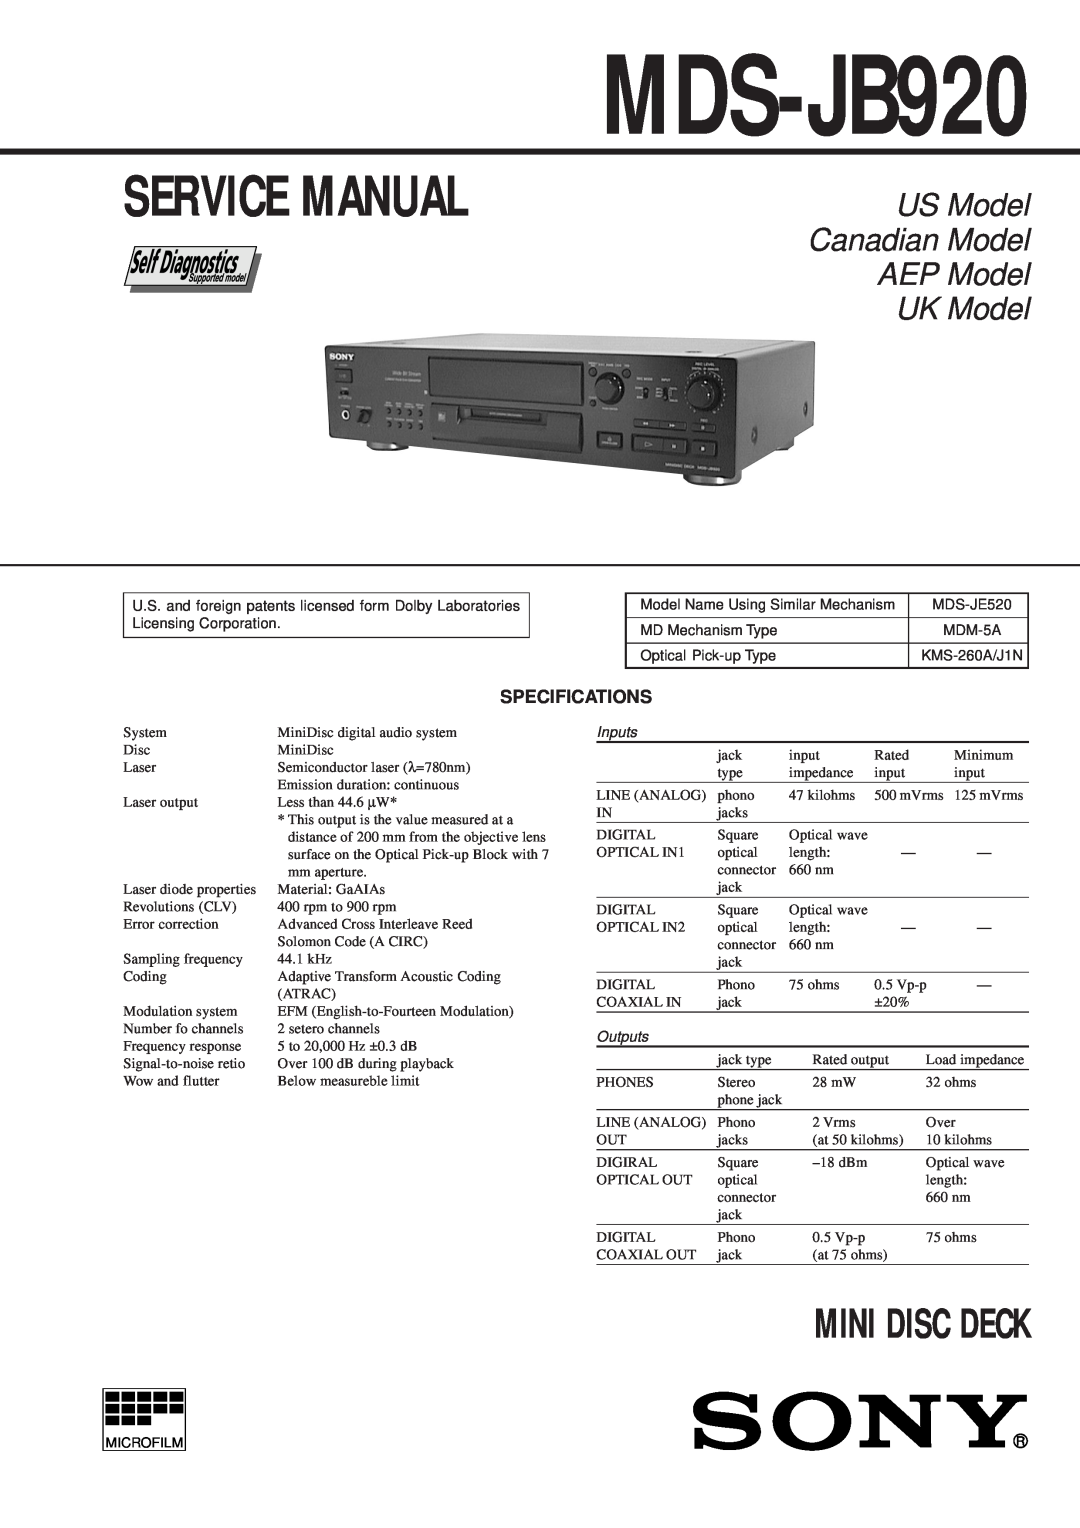 Sony MDS-JB920 service manual Specifications, Service Manual, Mini Disc Deck, US Model Canadian Model AEP Model UK Model 